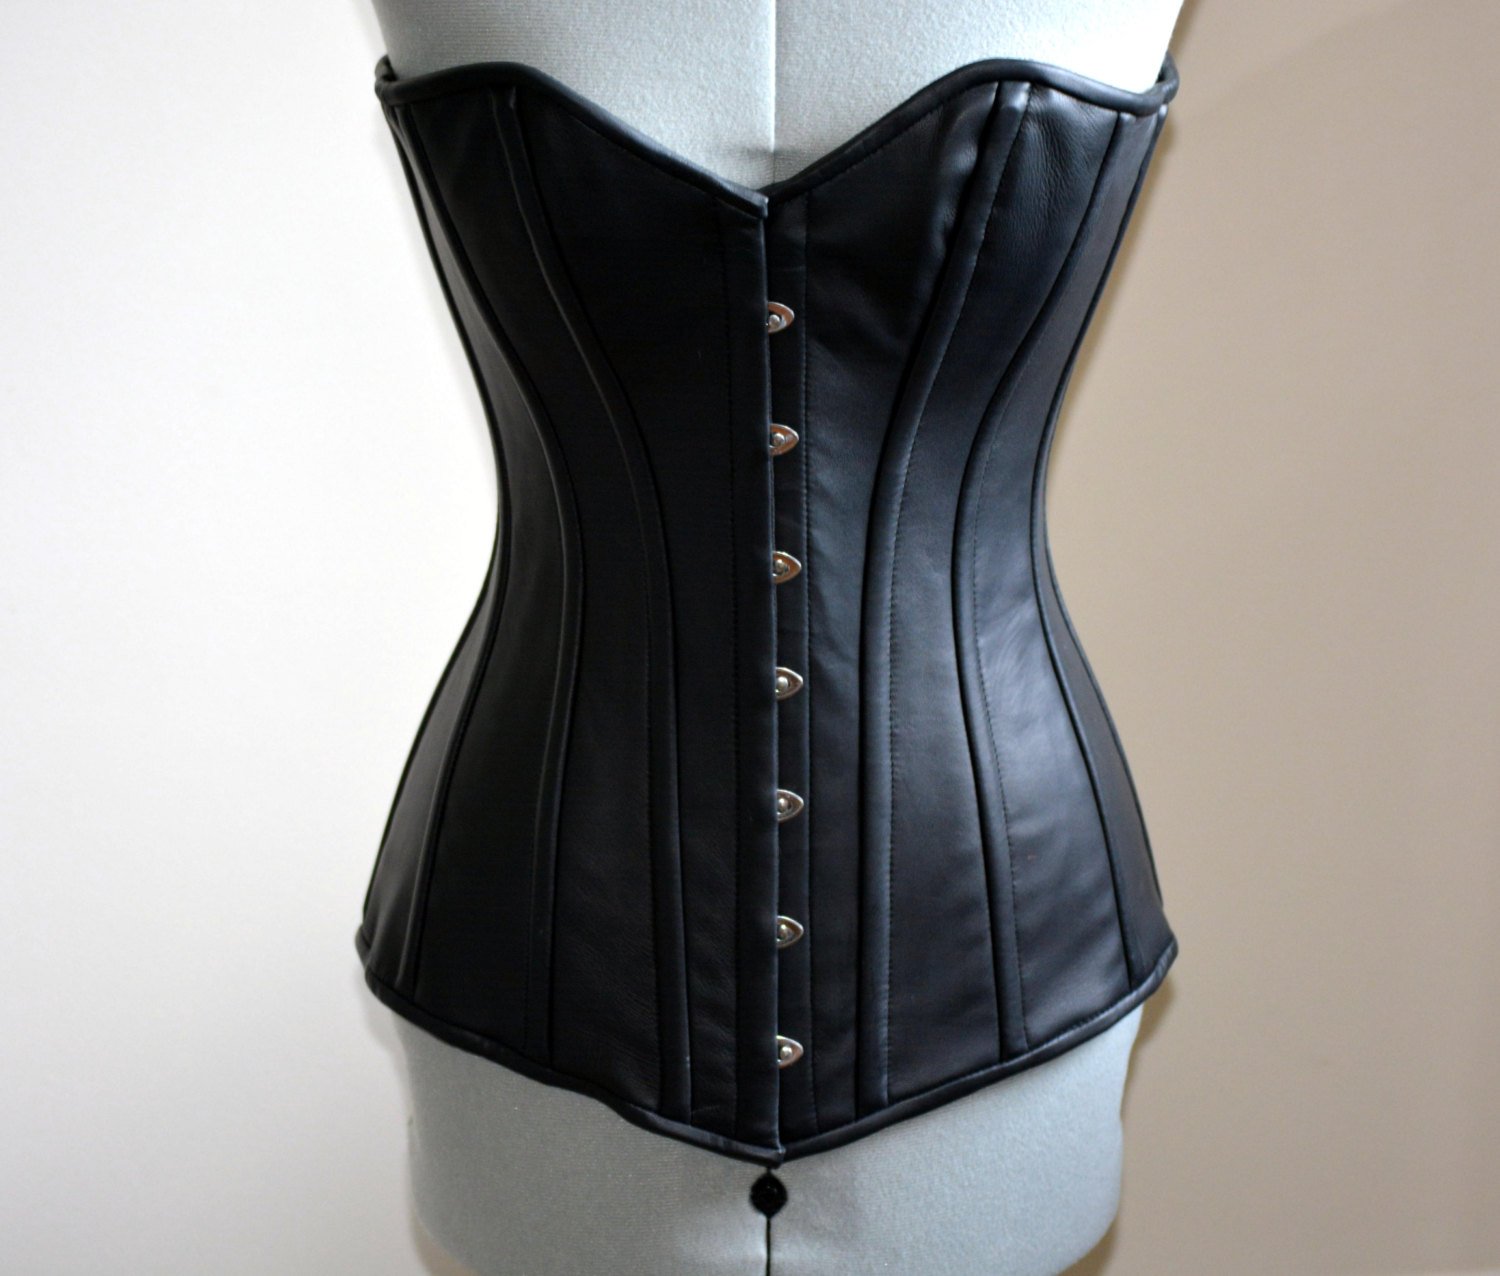 Exclusive lambskin long corset on steel bones, black, brown, white